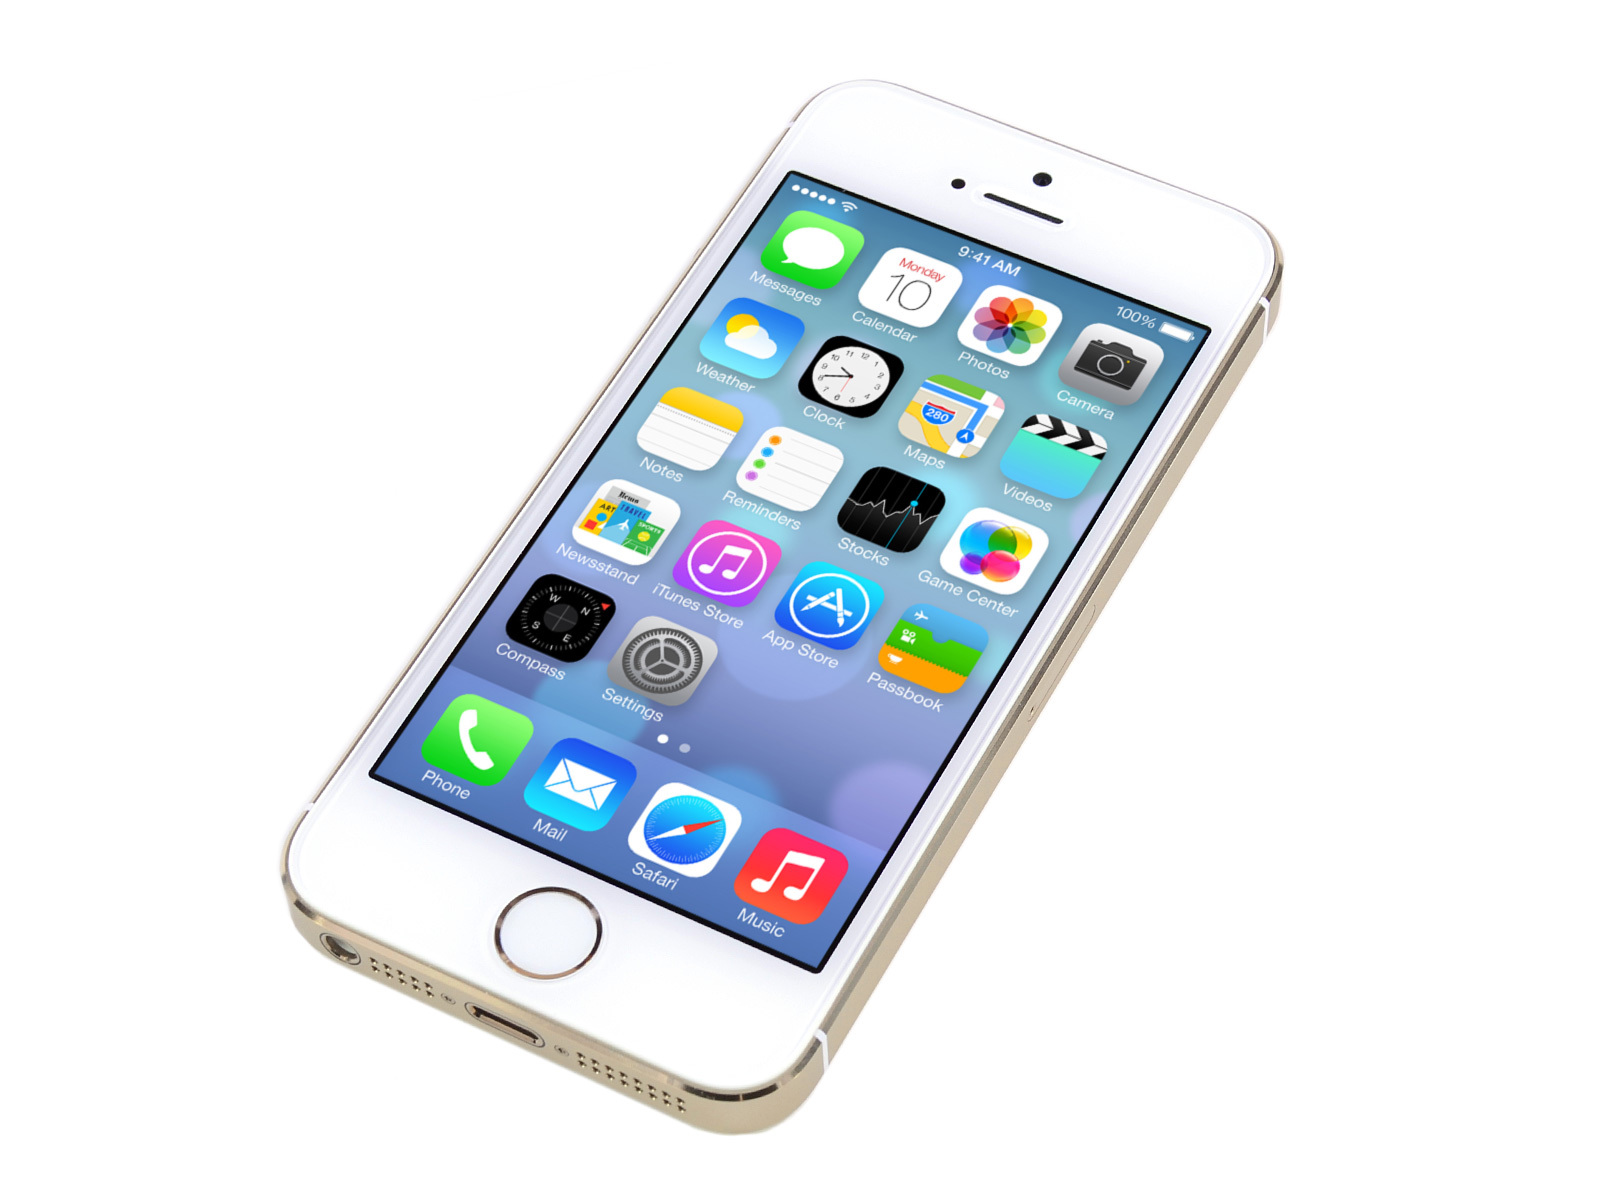 iPhone 5s White Glass Repair - TOP 10 : Smartphones of 2013